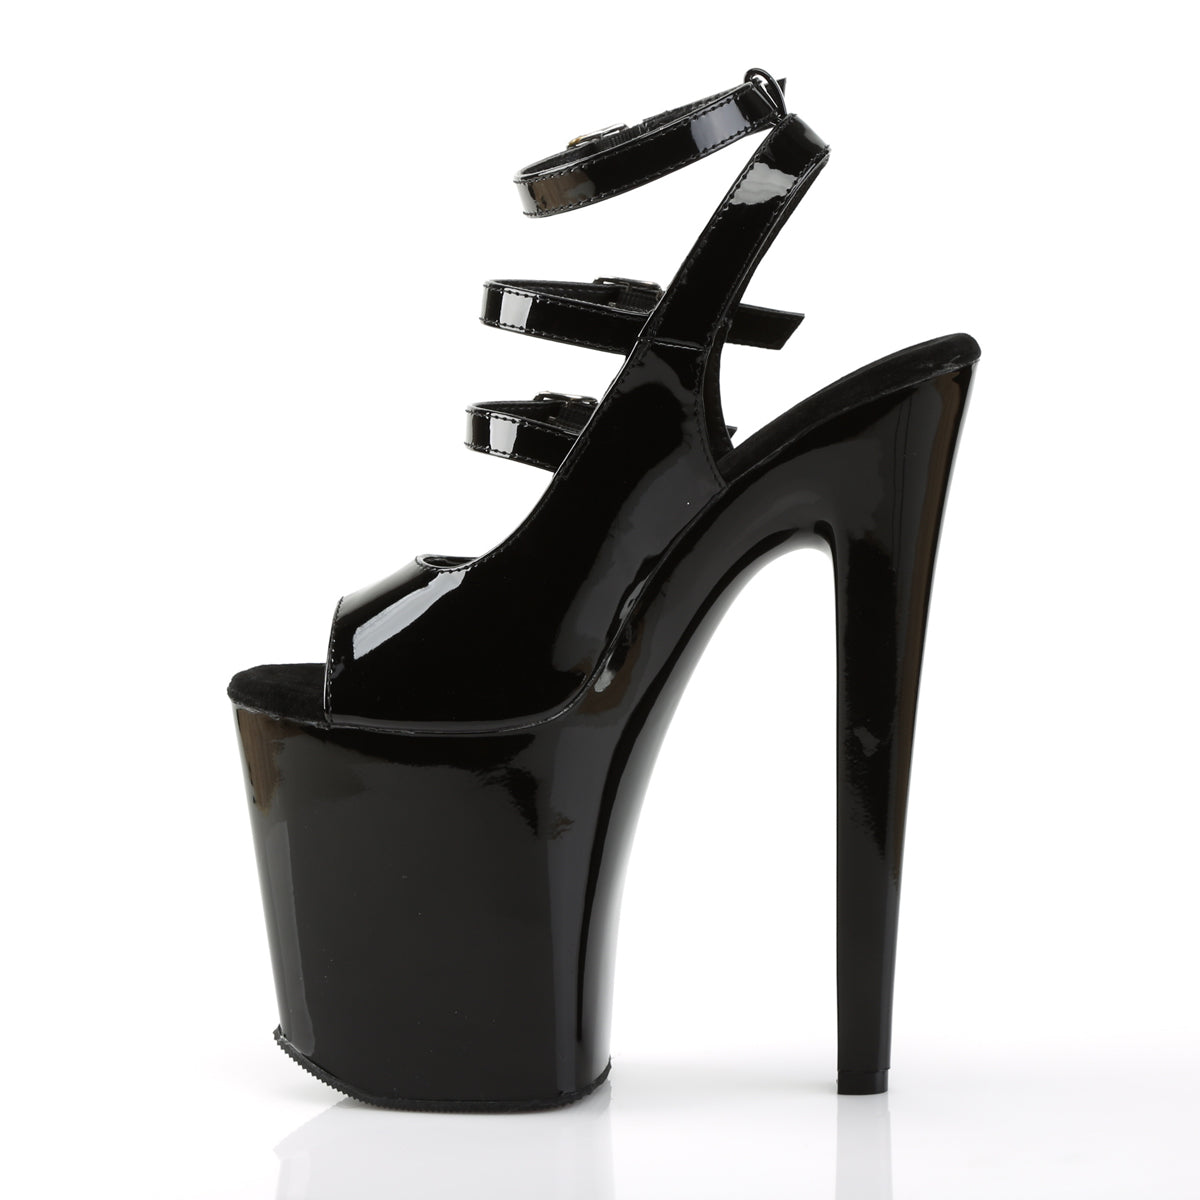 XTREME-873 Black Ankle Peep Toe High Heel